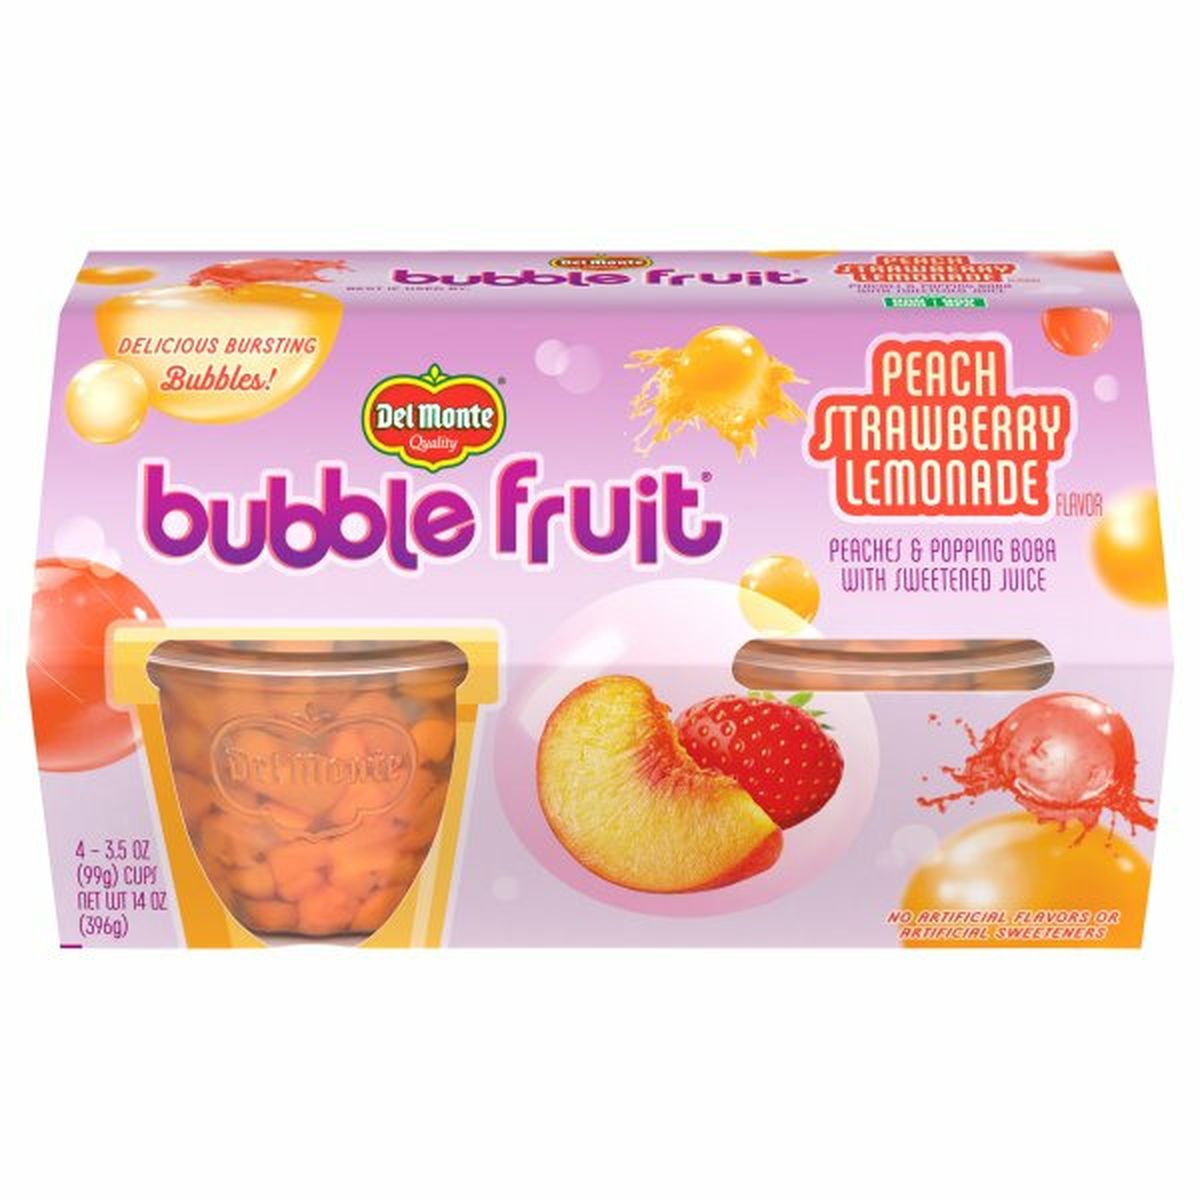 Calories in Del Monte Bubble Fruit, Peach Strawberry Lemonade Flavor